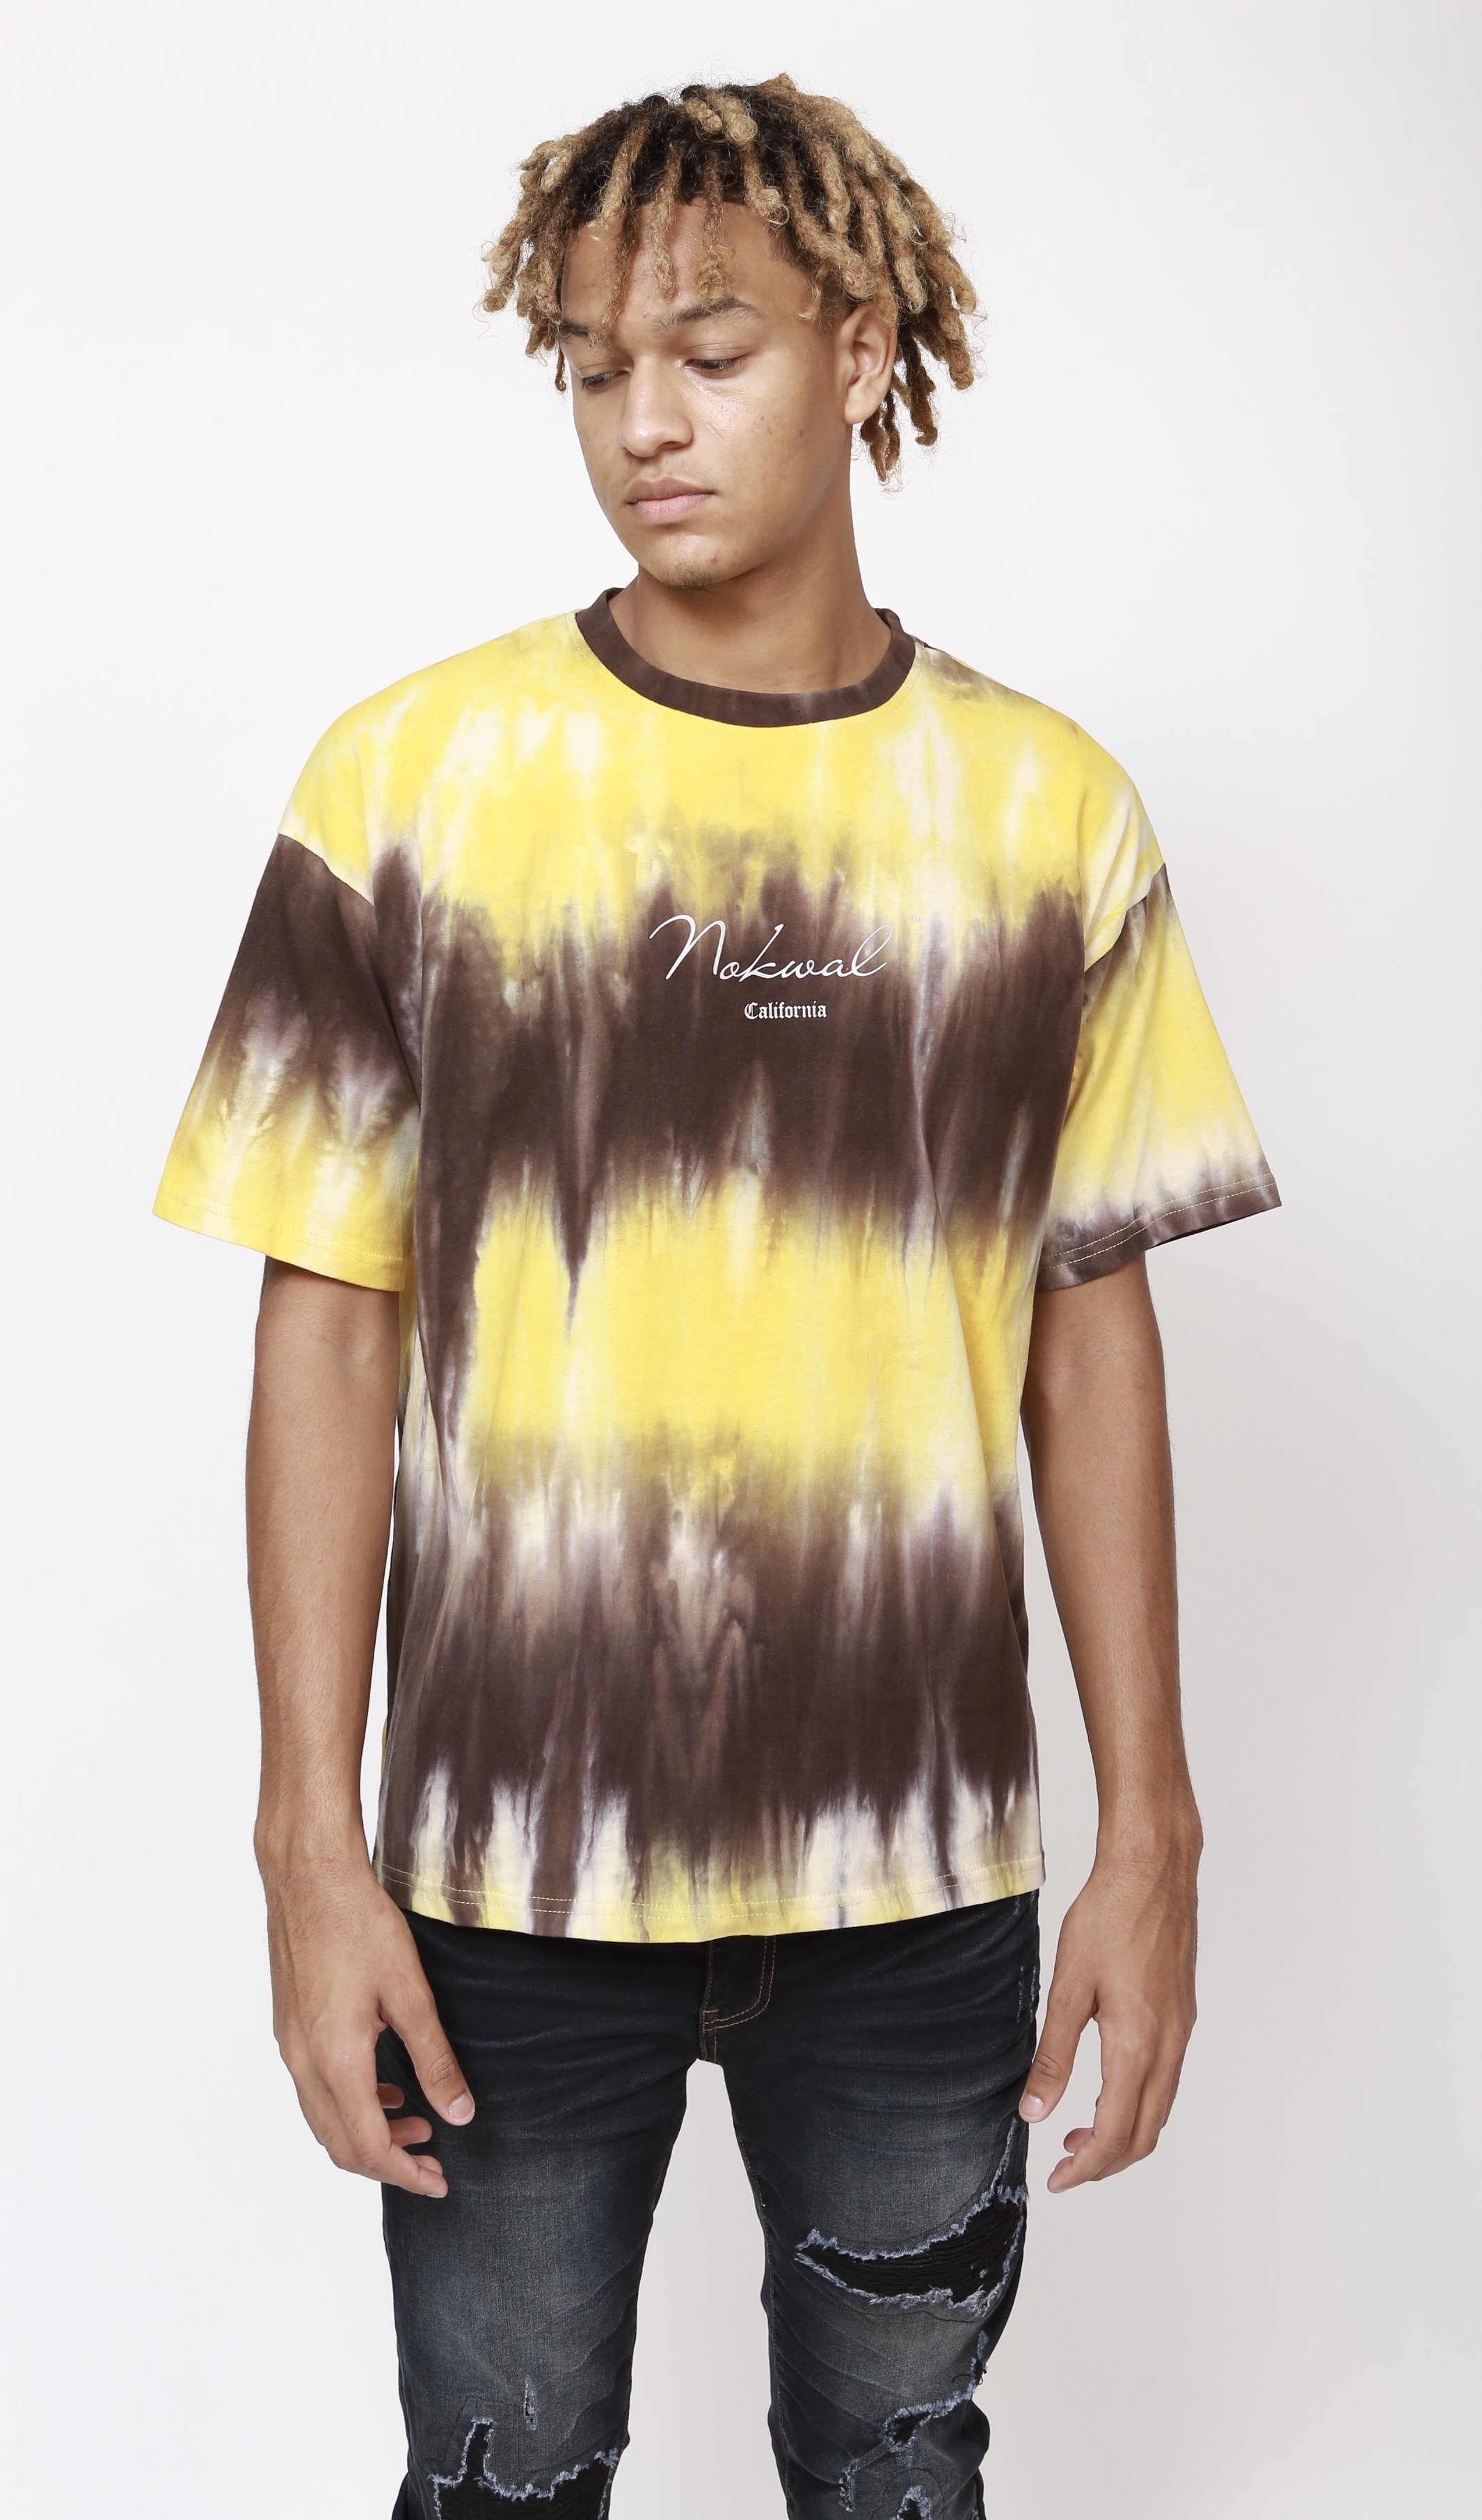 NOKWAL Yellow/Brown Tie Dye T Shirt 202012YTDT - Karmaloop